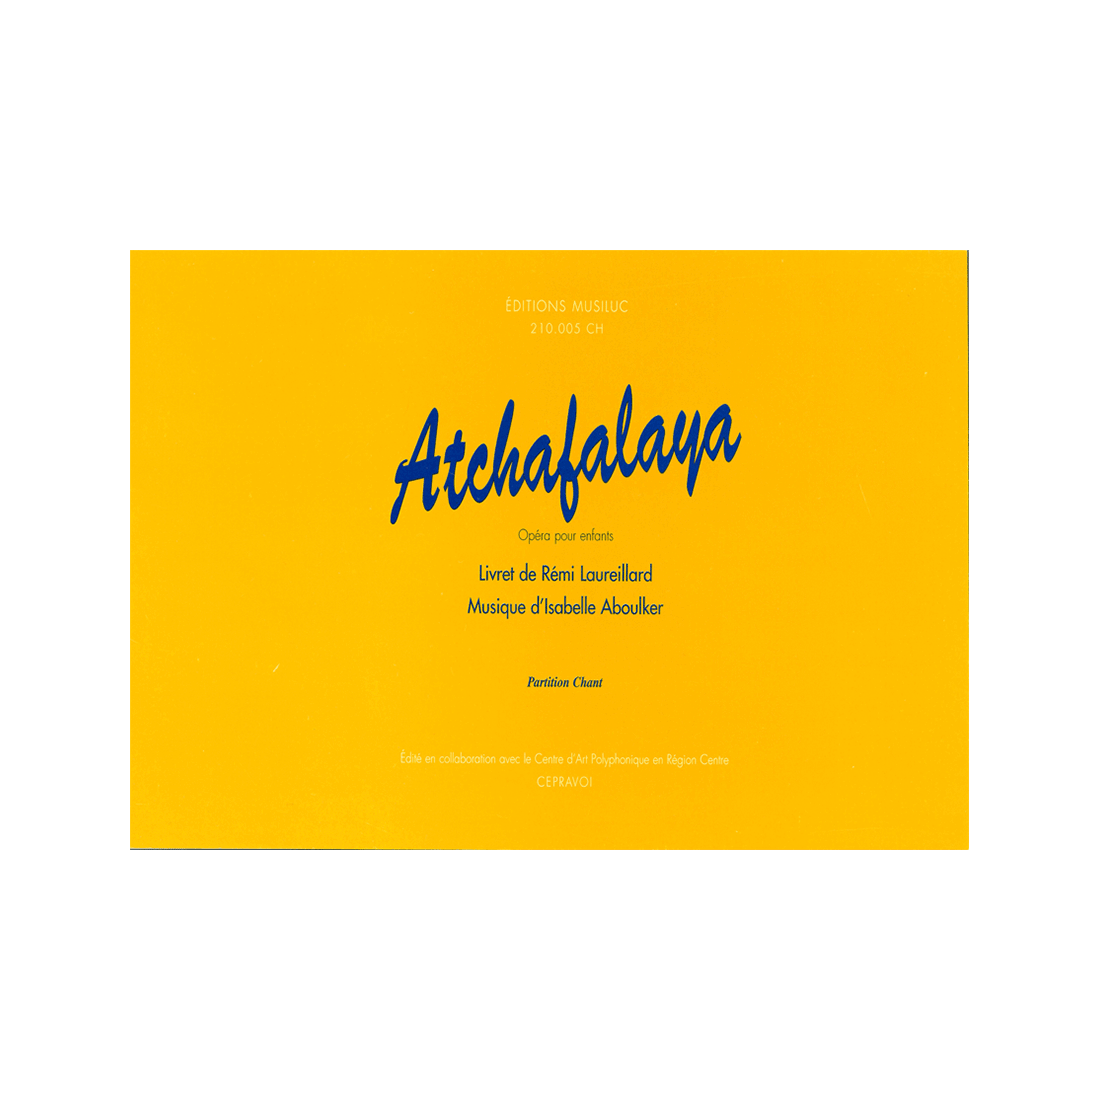 Atchafalaya, opéra pour enfants (Cahier du choriste)